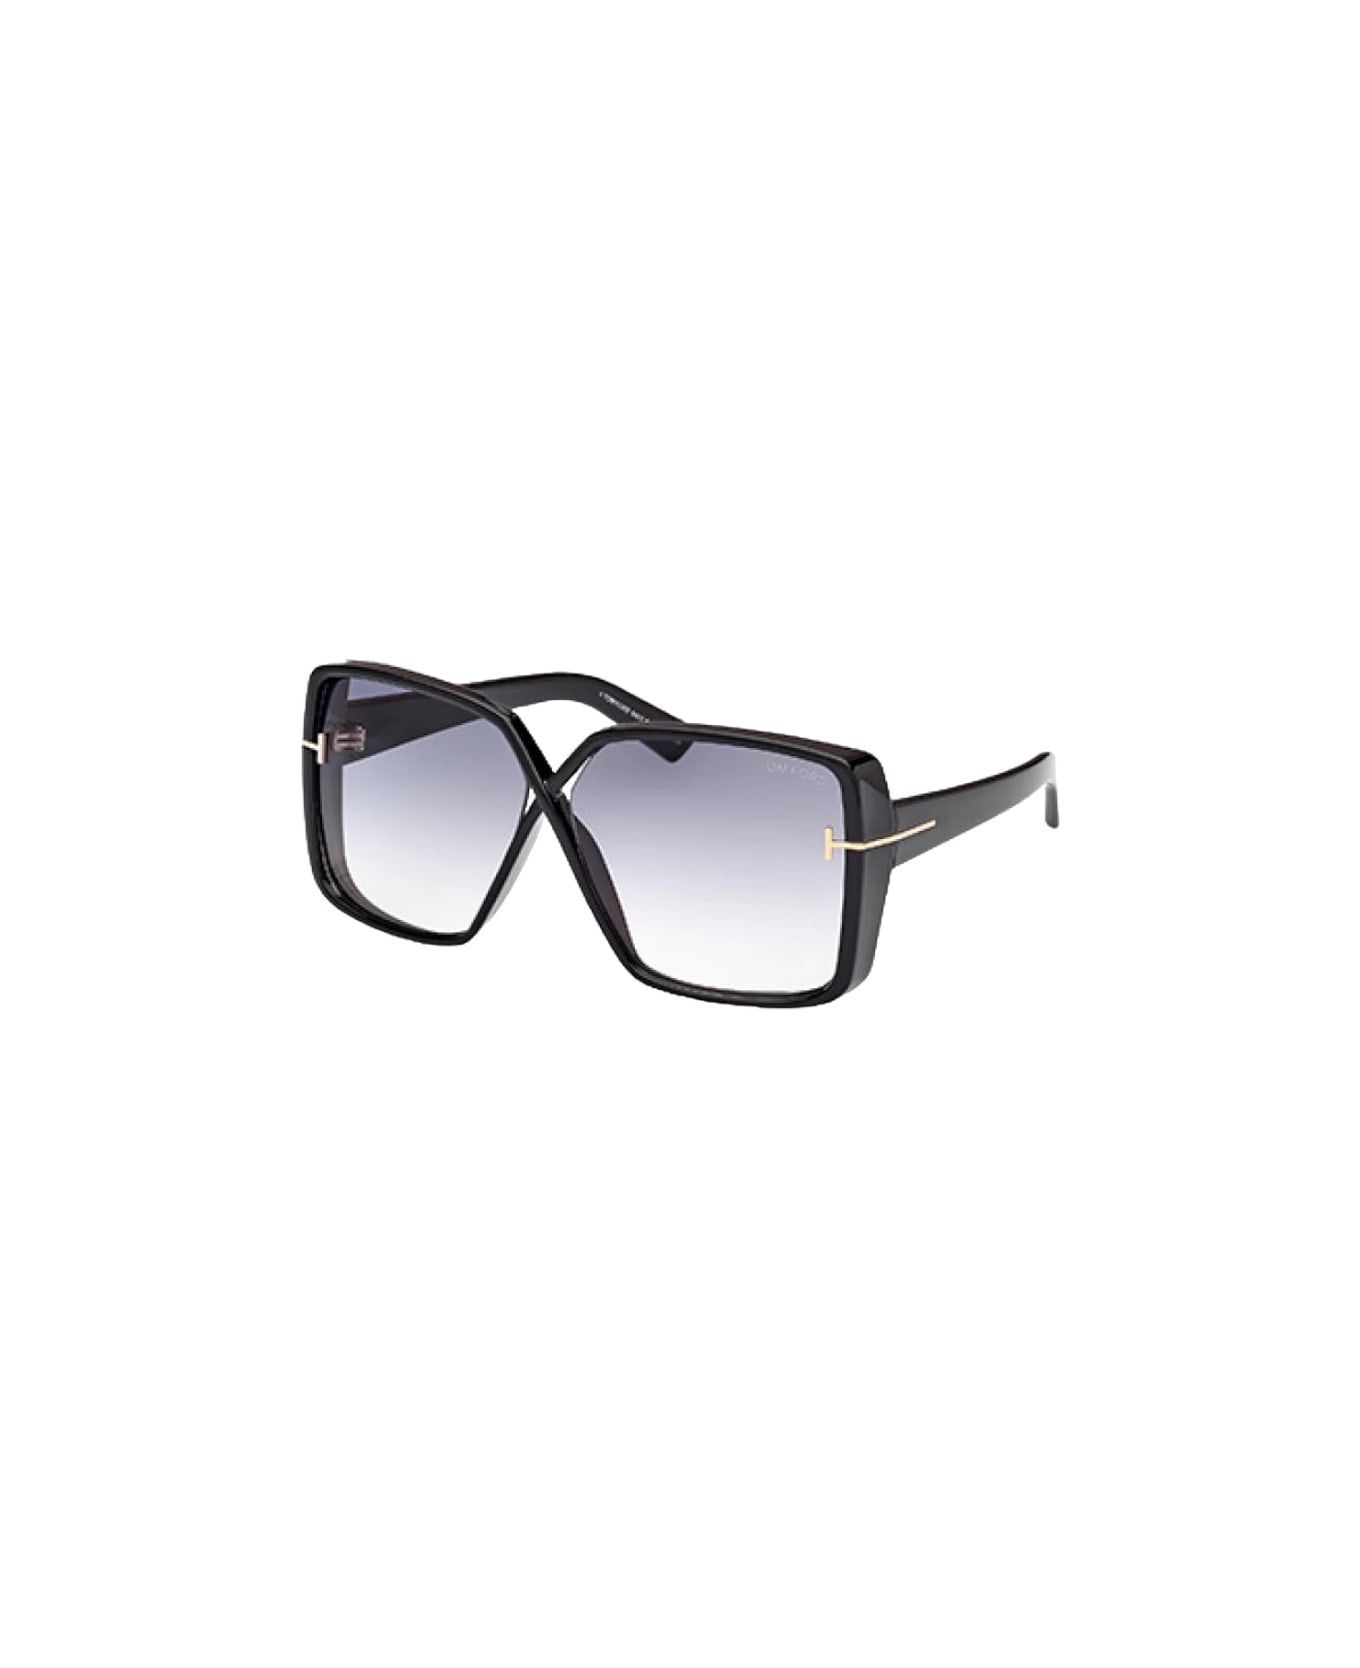 Tom Ford Eyewear Tf 1117 /s Sunglasses